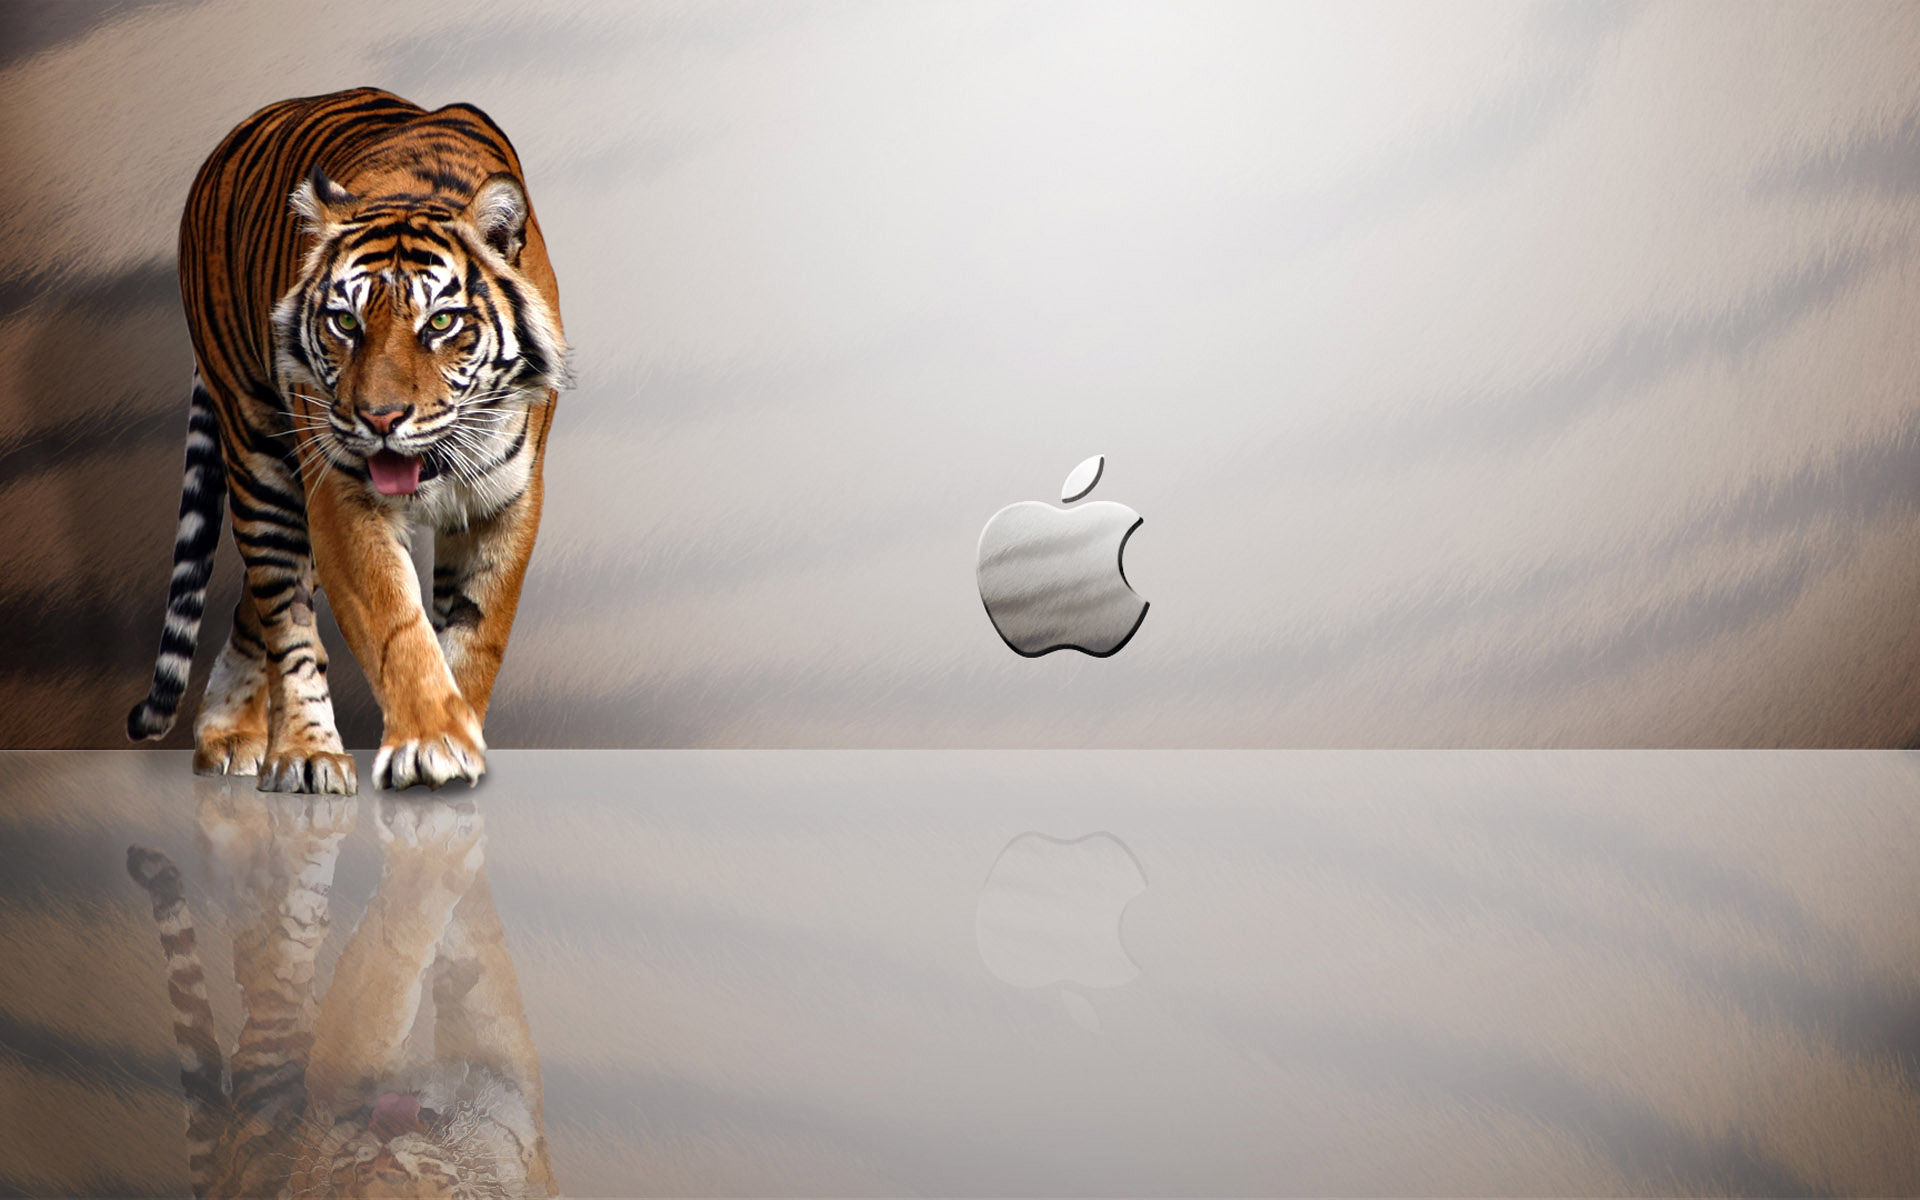 Tiger Mac Os Desktop HD Wallpaper High Quality